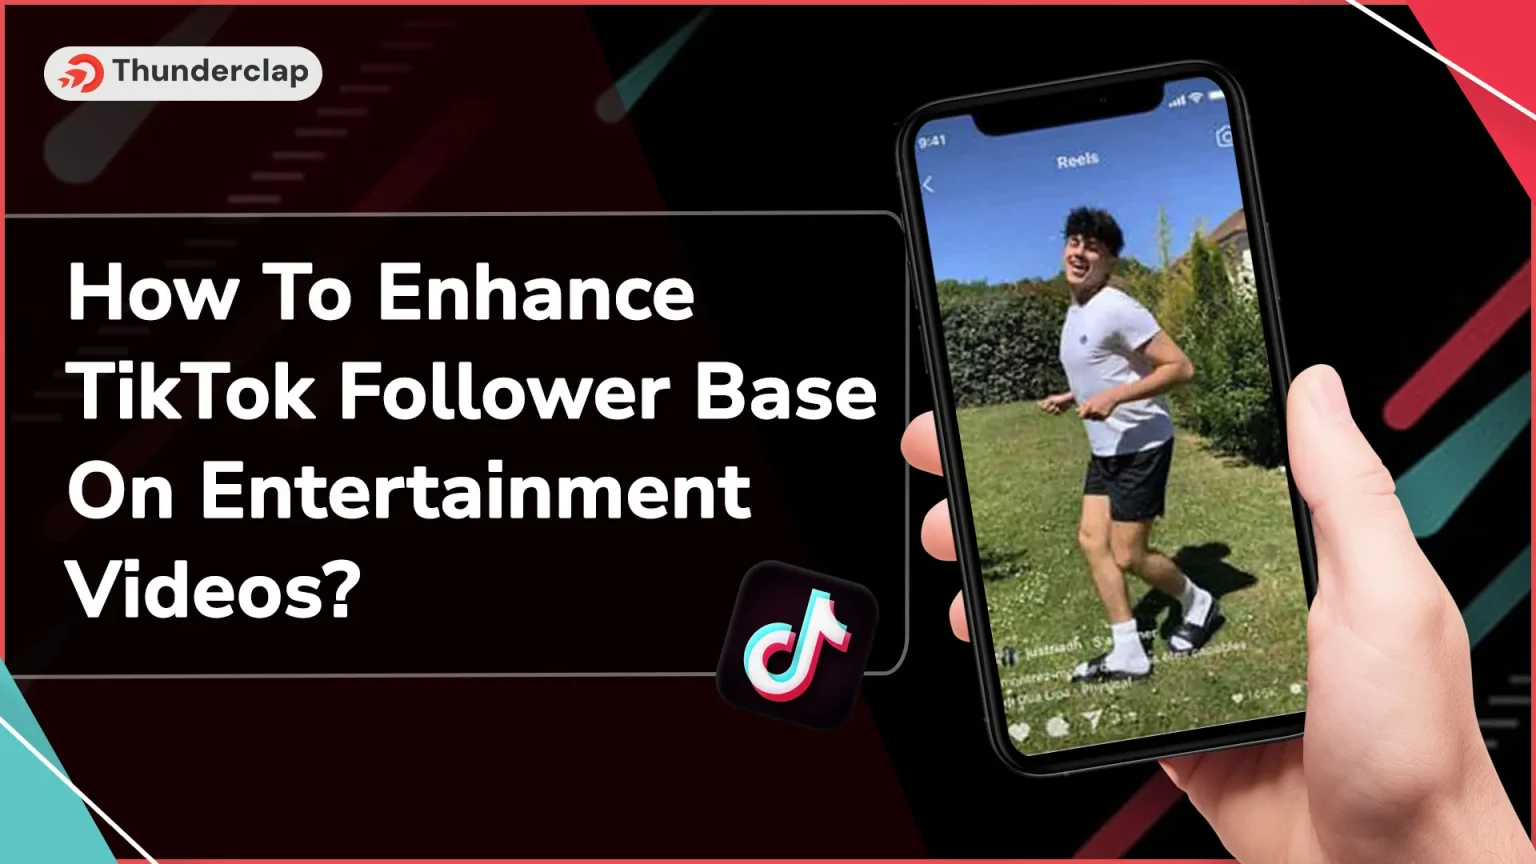 How To Enhance TikTok Follower Base On Entertainment Videos